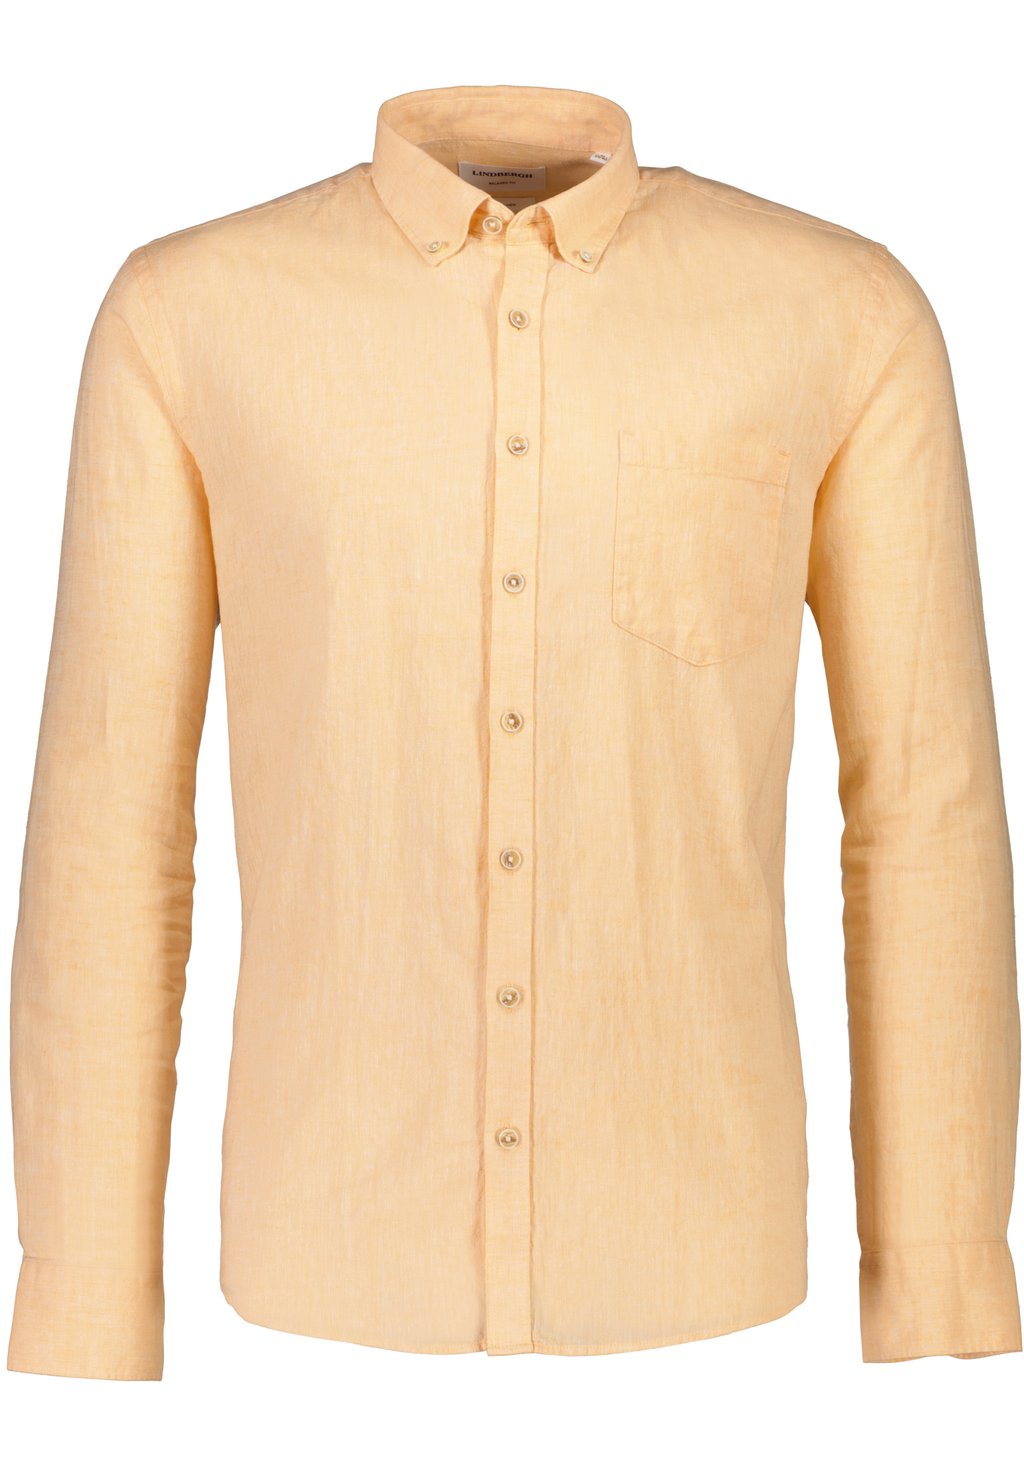 Рубашка Lindbergh, персиковая